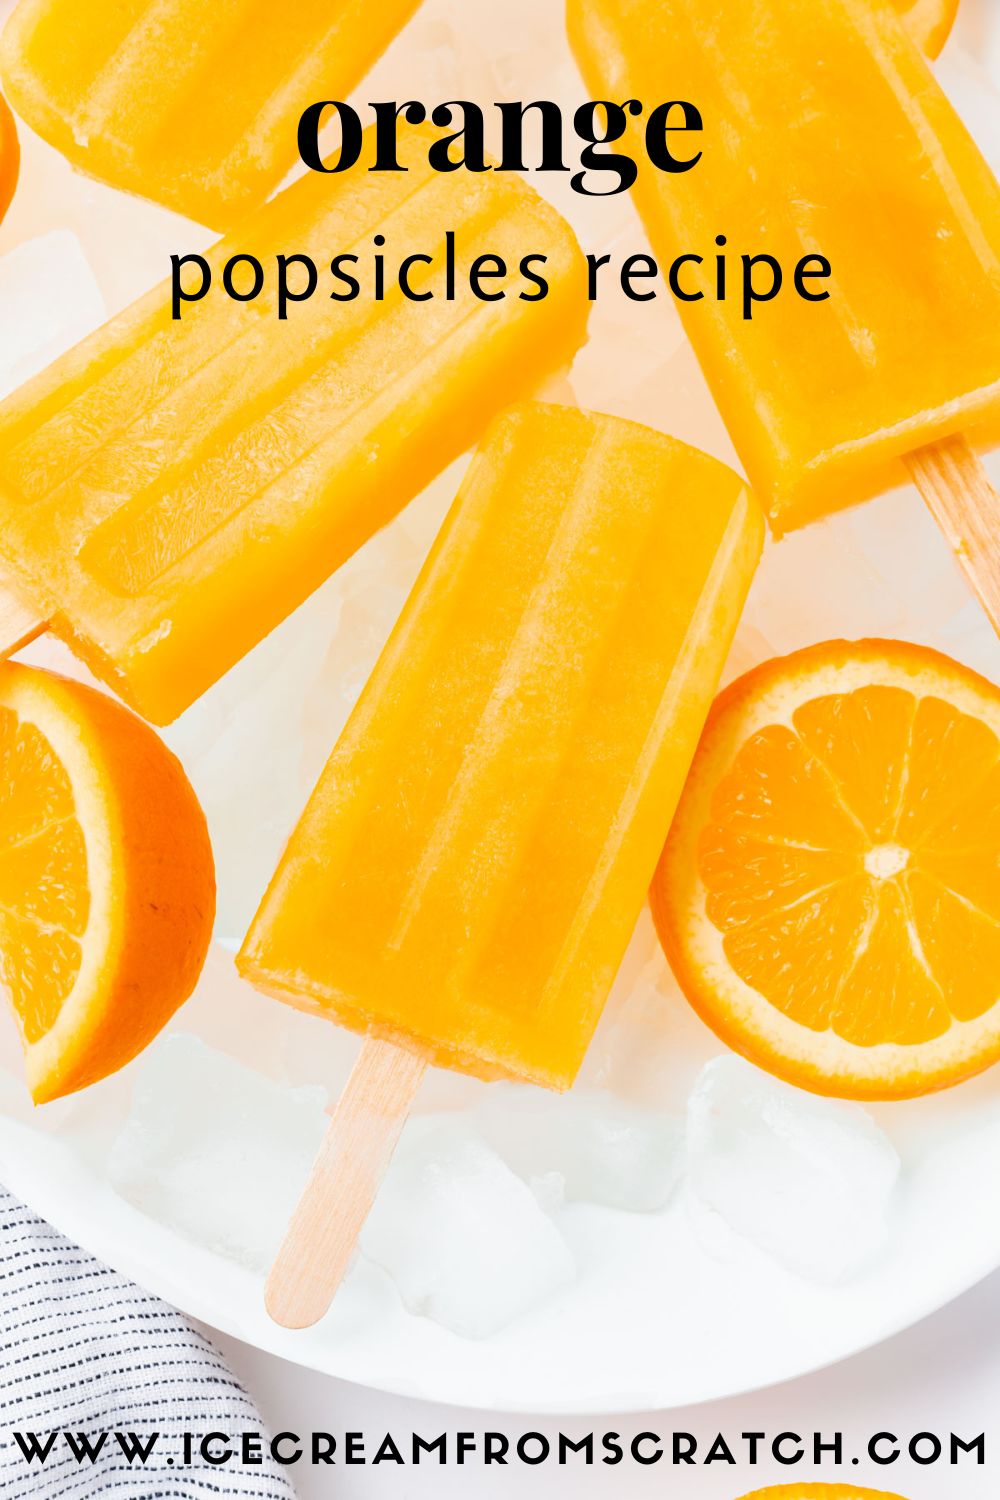 Orange Creamsicle Poke Cake Recipe {Easy Dessert Recipe}